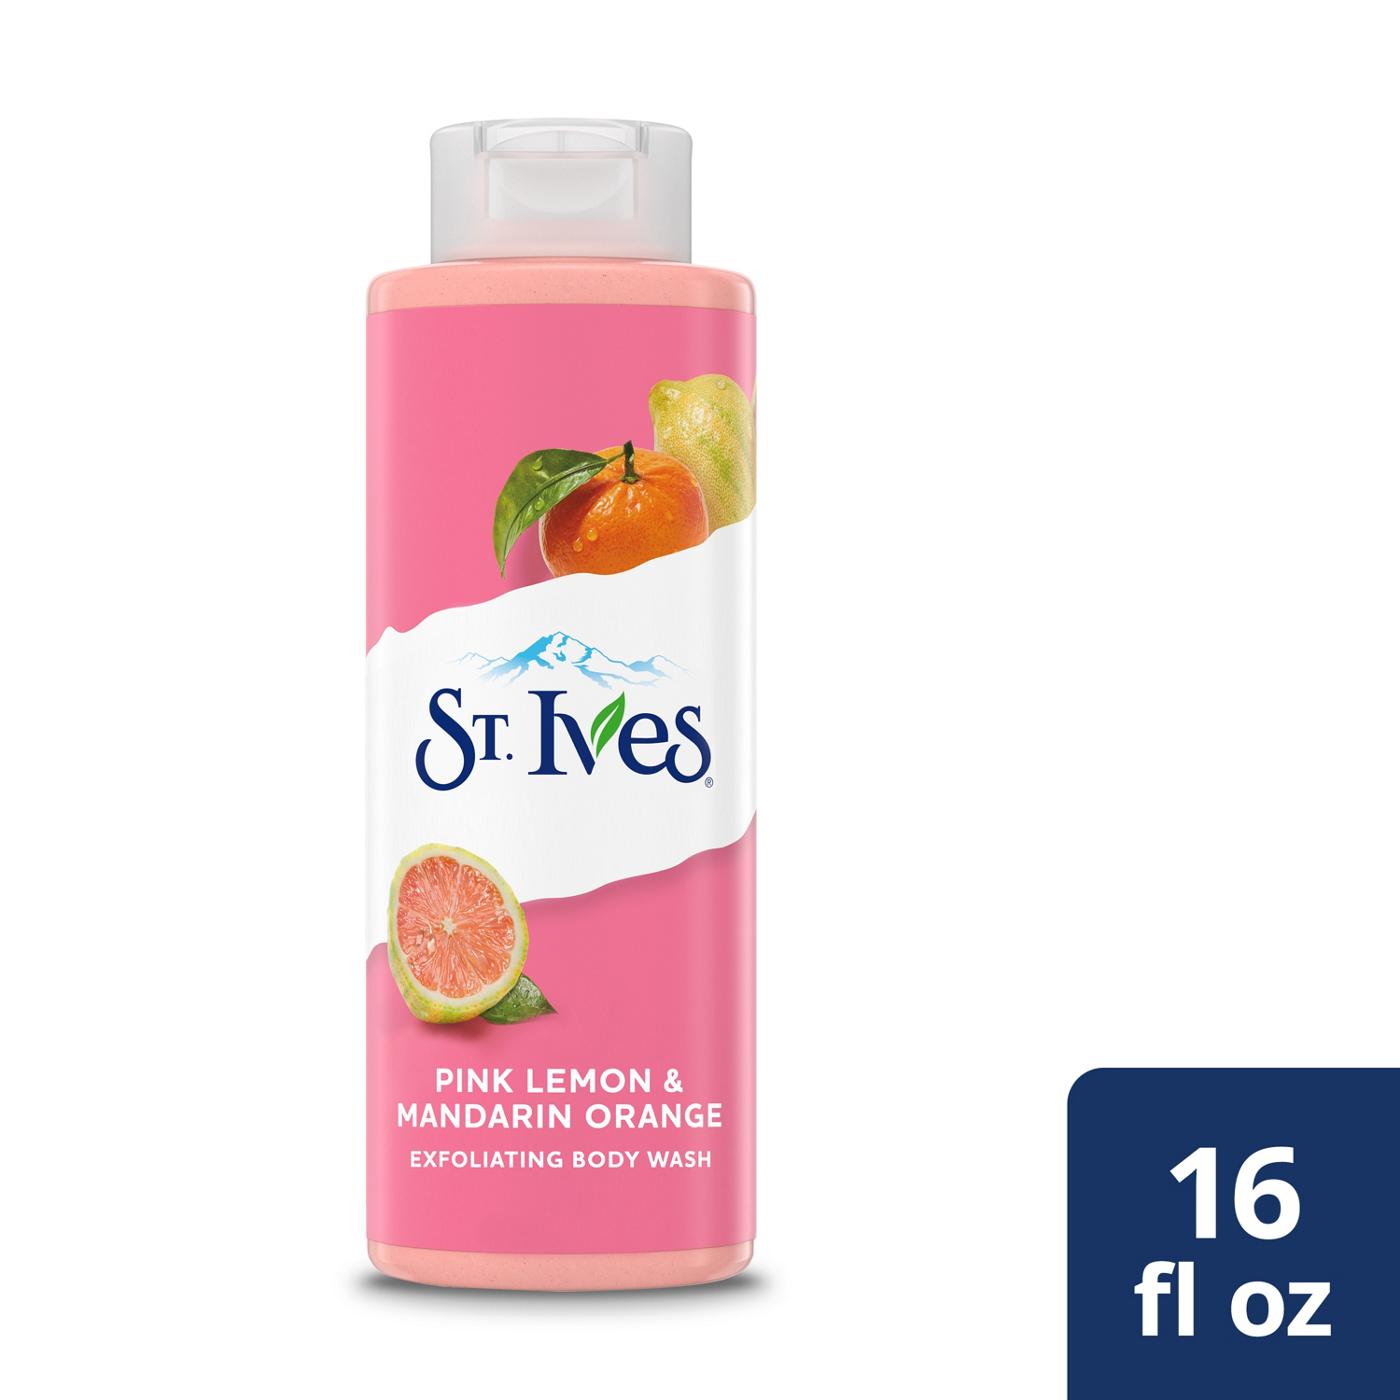 St. Ives Exfoliating Body Wash - Pink Lemon & Mandarin Orange; image 3 of 4